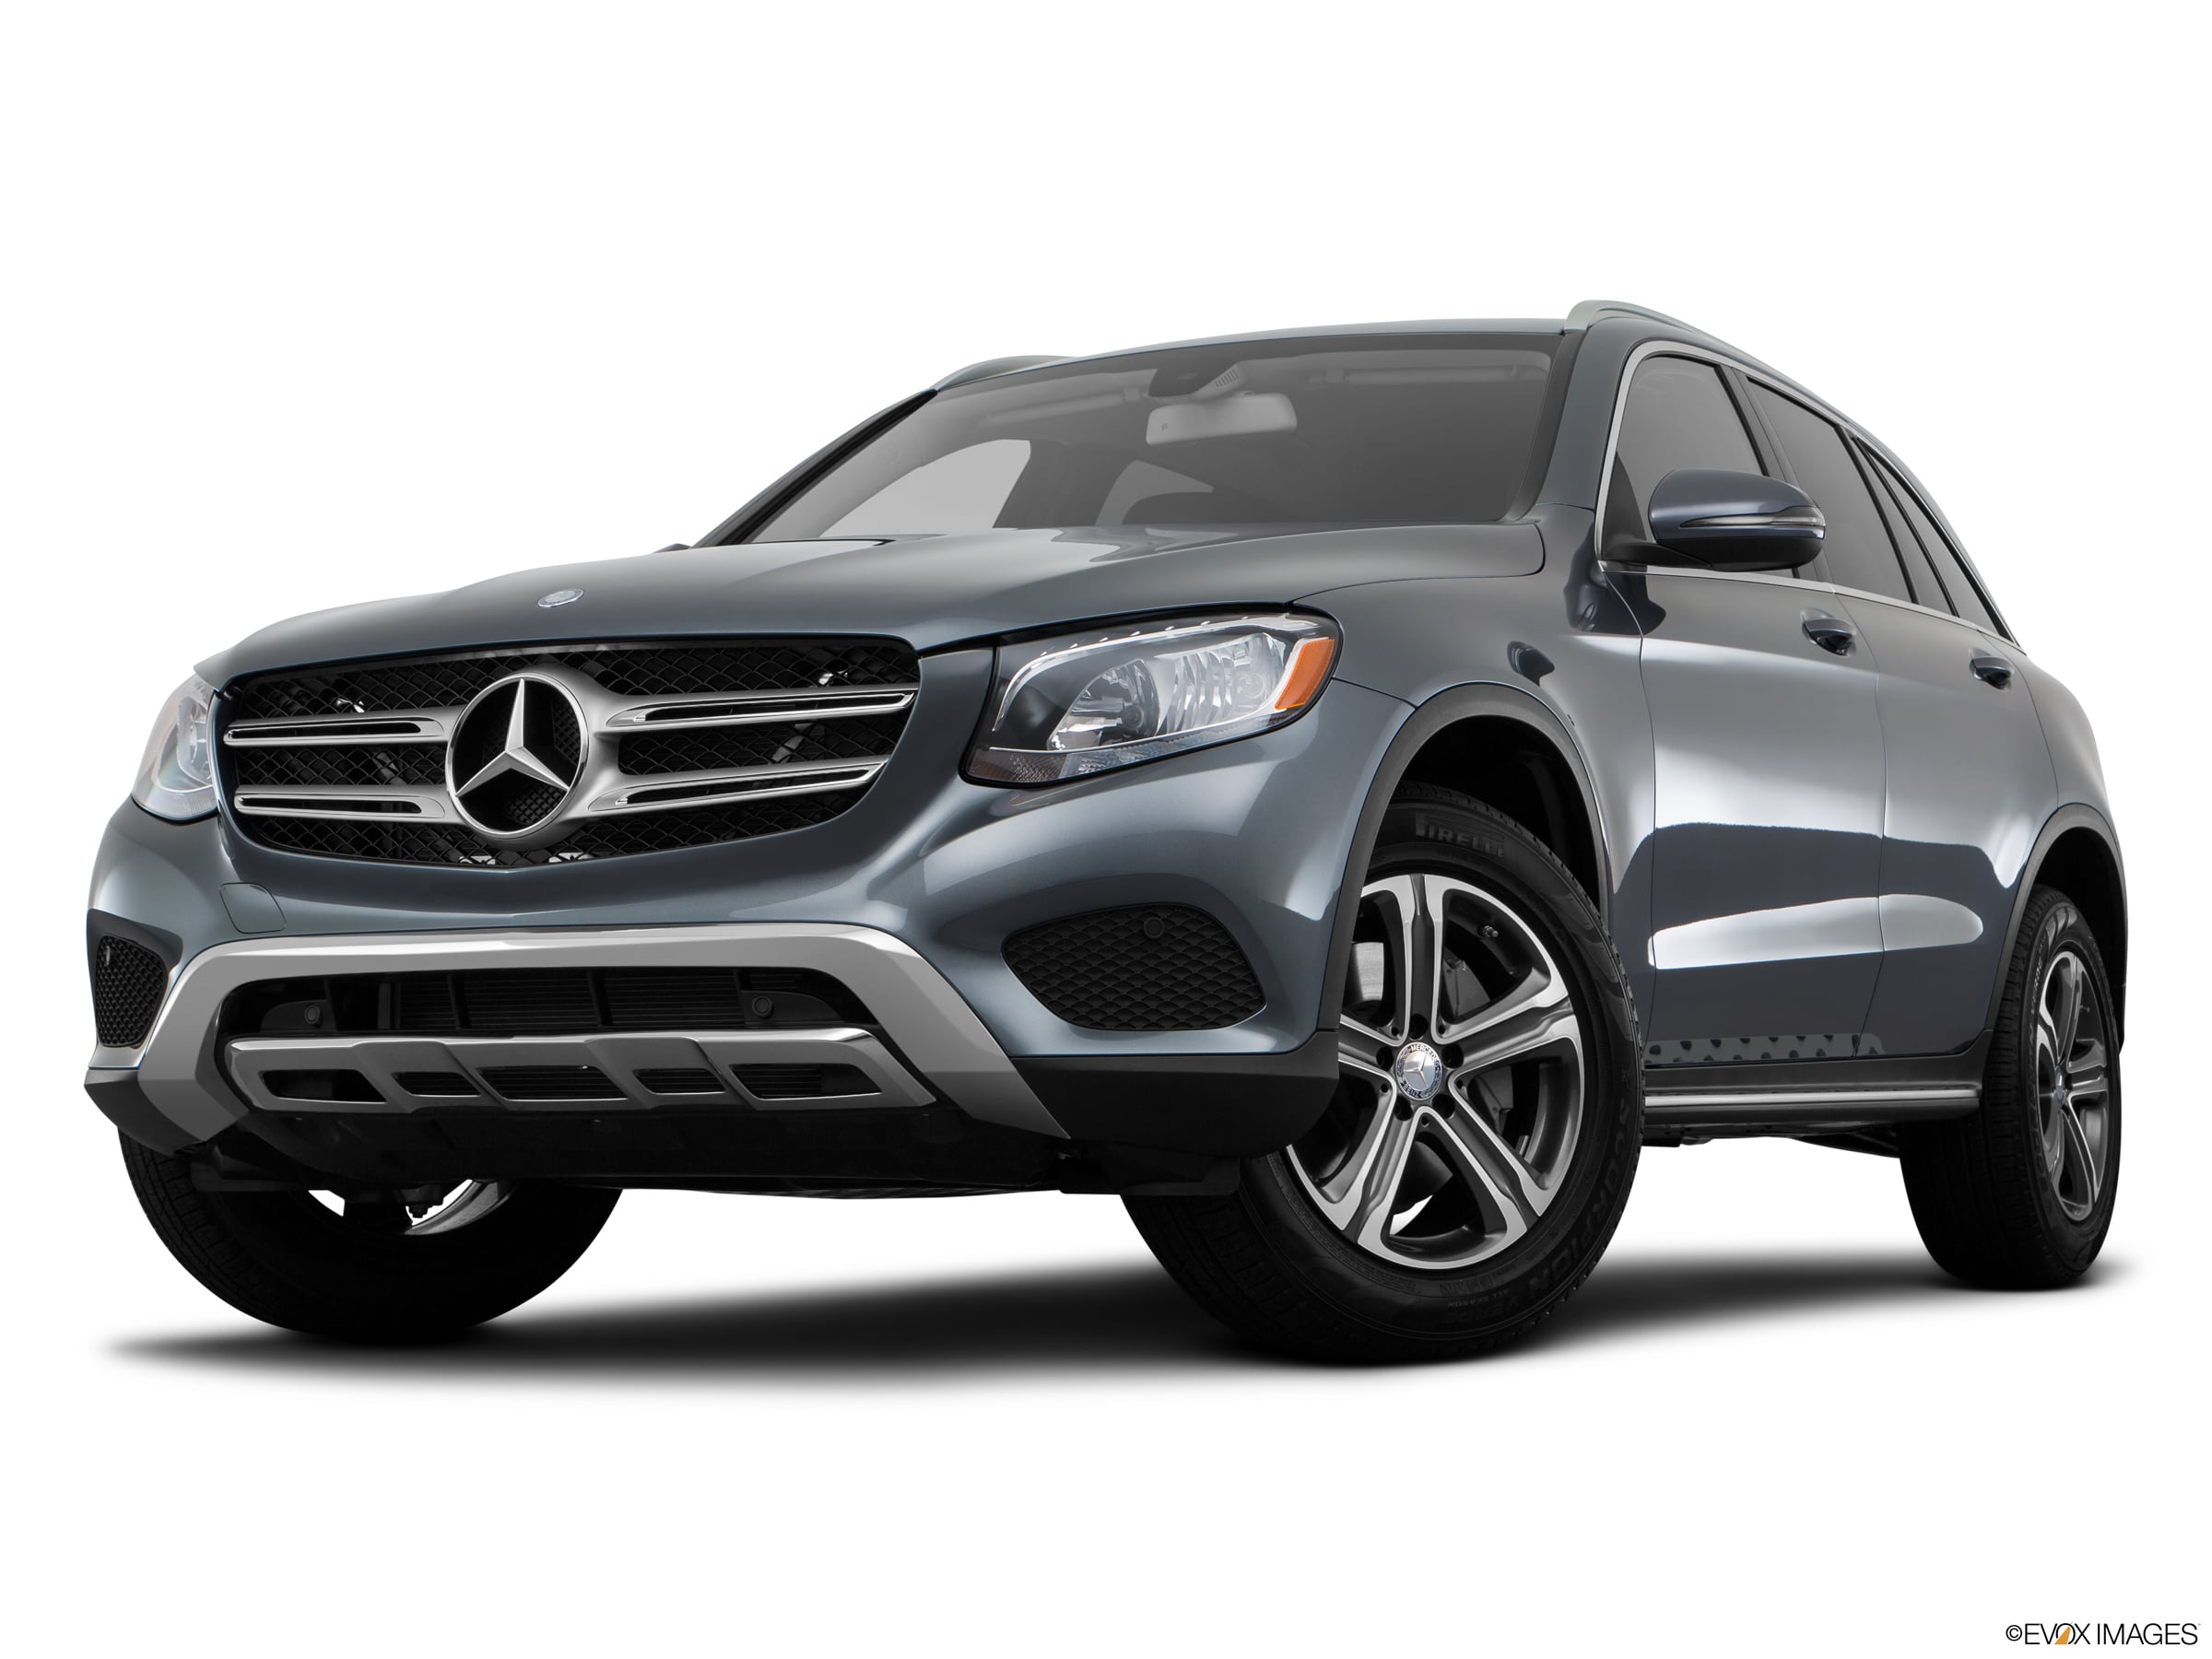 2016 Mercedes-Benz GLC Virtual Tour, Specs, Trims, Price & More